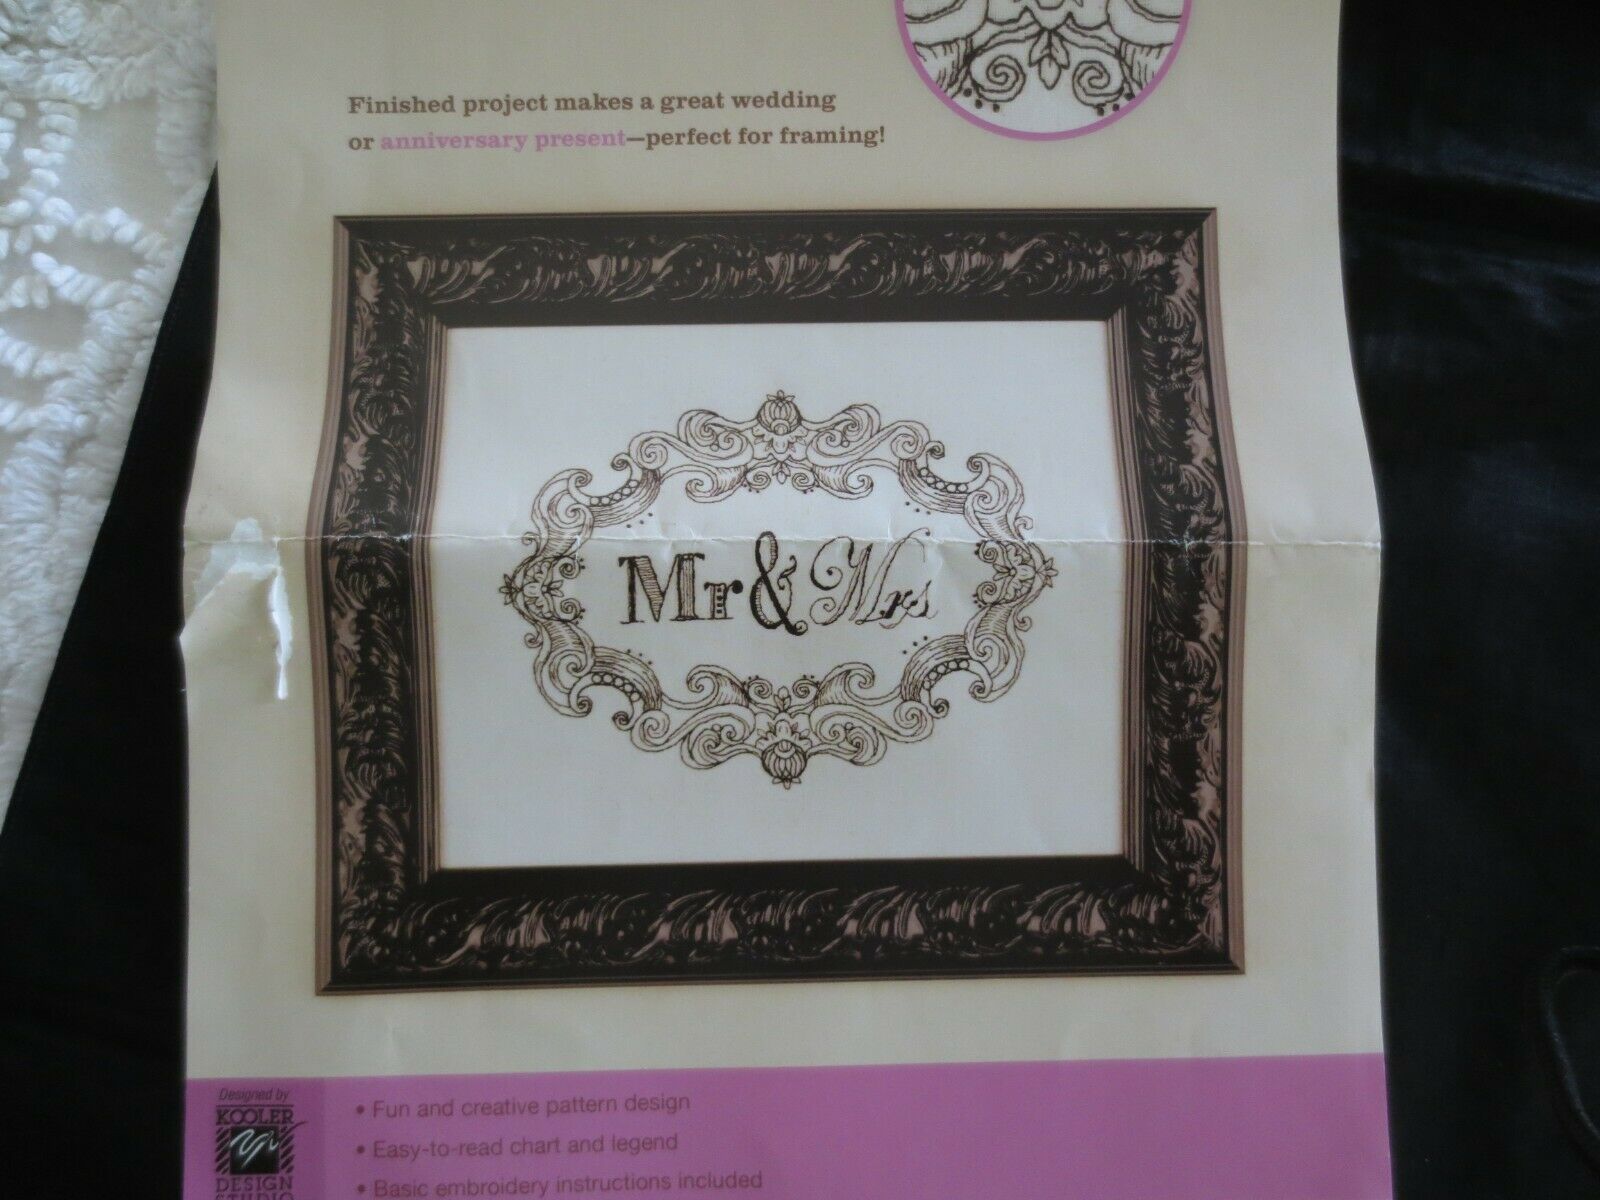 2011 Artiste MR. & MRS. BLACK EMBROIDERY Kit - Design 11 11 1/4" x 1/4" x 8 1/2" - $12.00